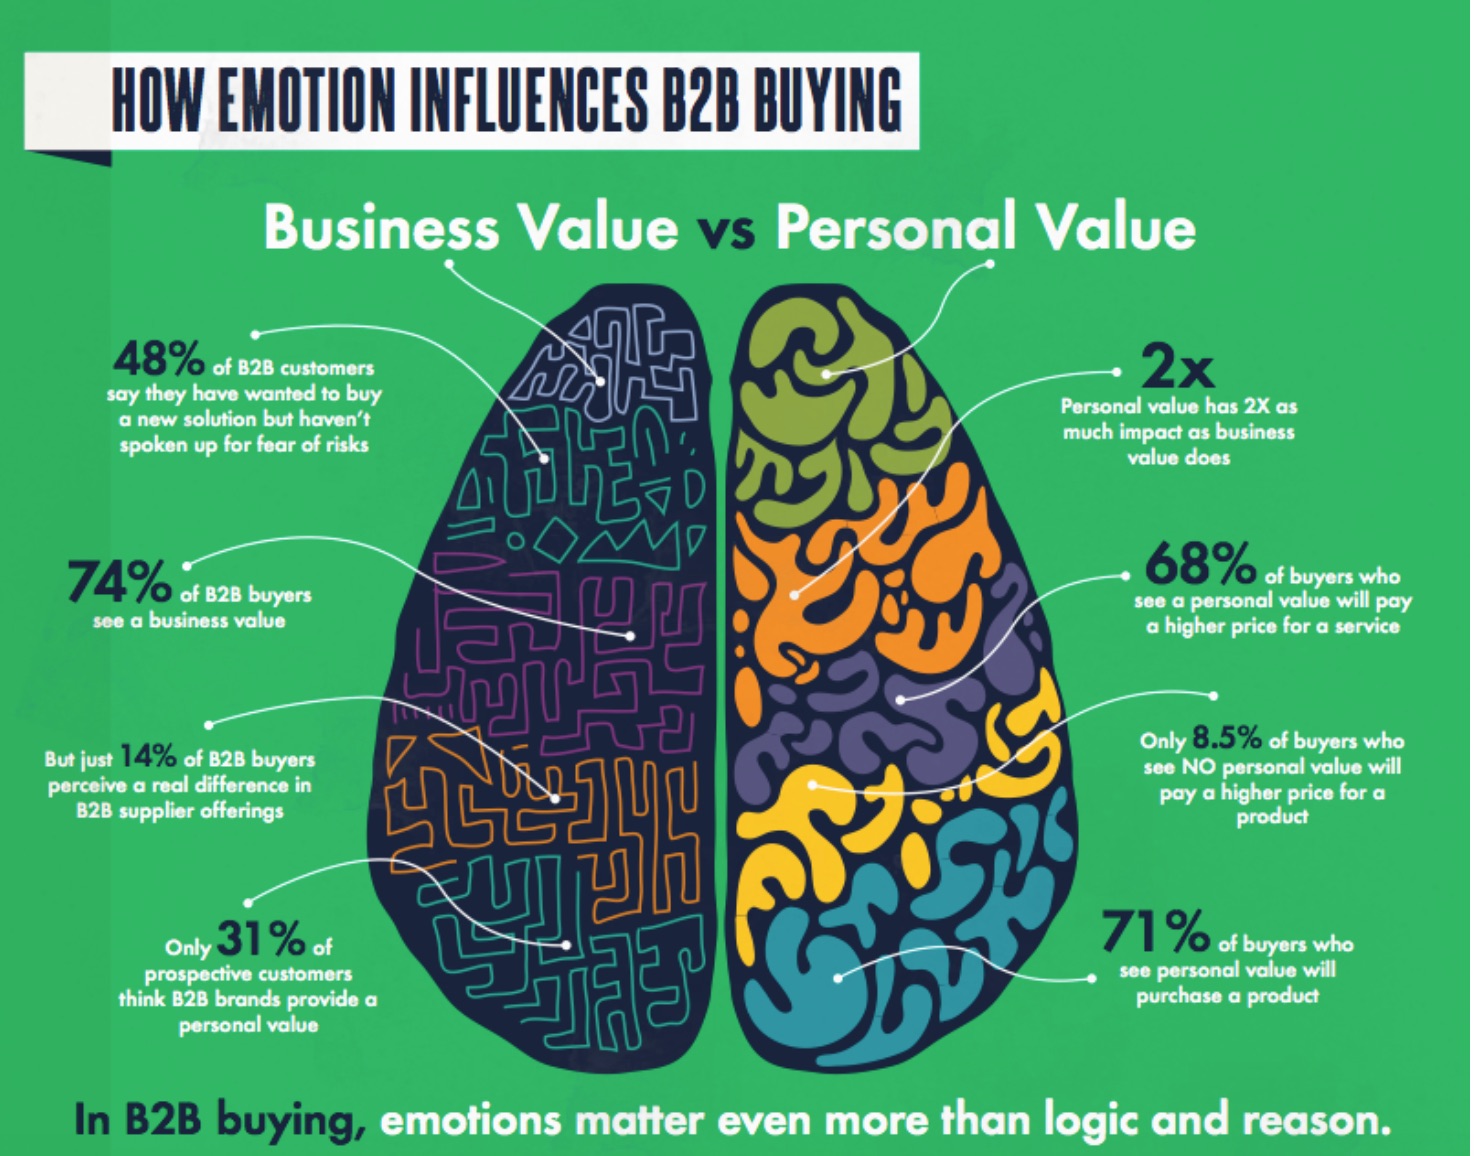 emotion drives b2b business decisions2 png 808 706 pixels